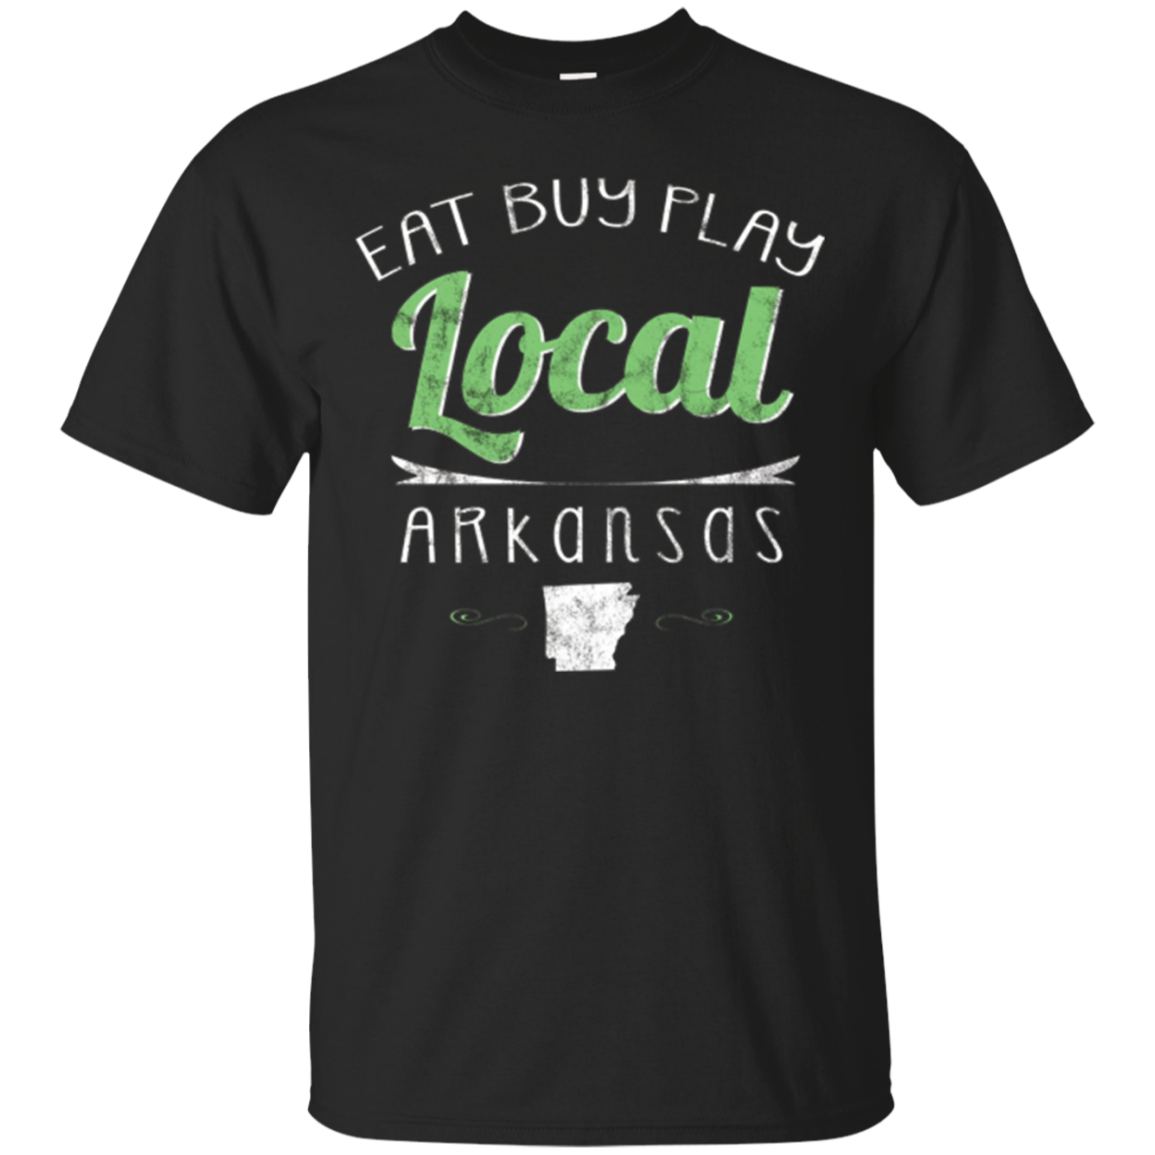 Eat Buy Play Local Arkansas Distressed T-shirt